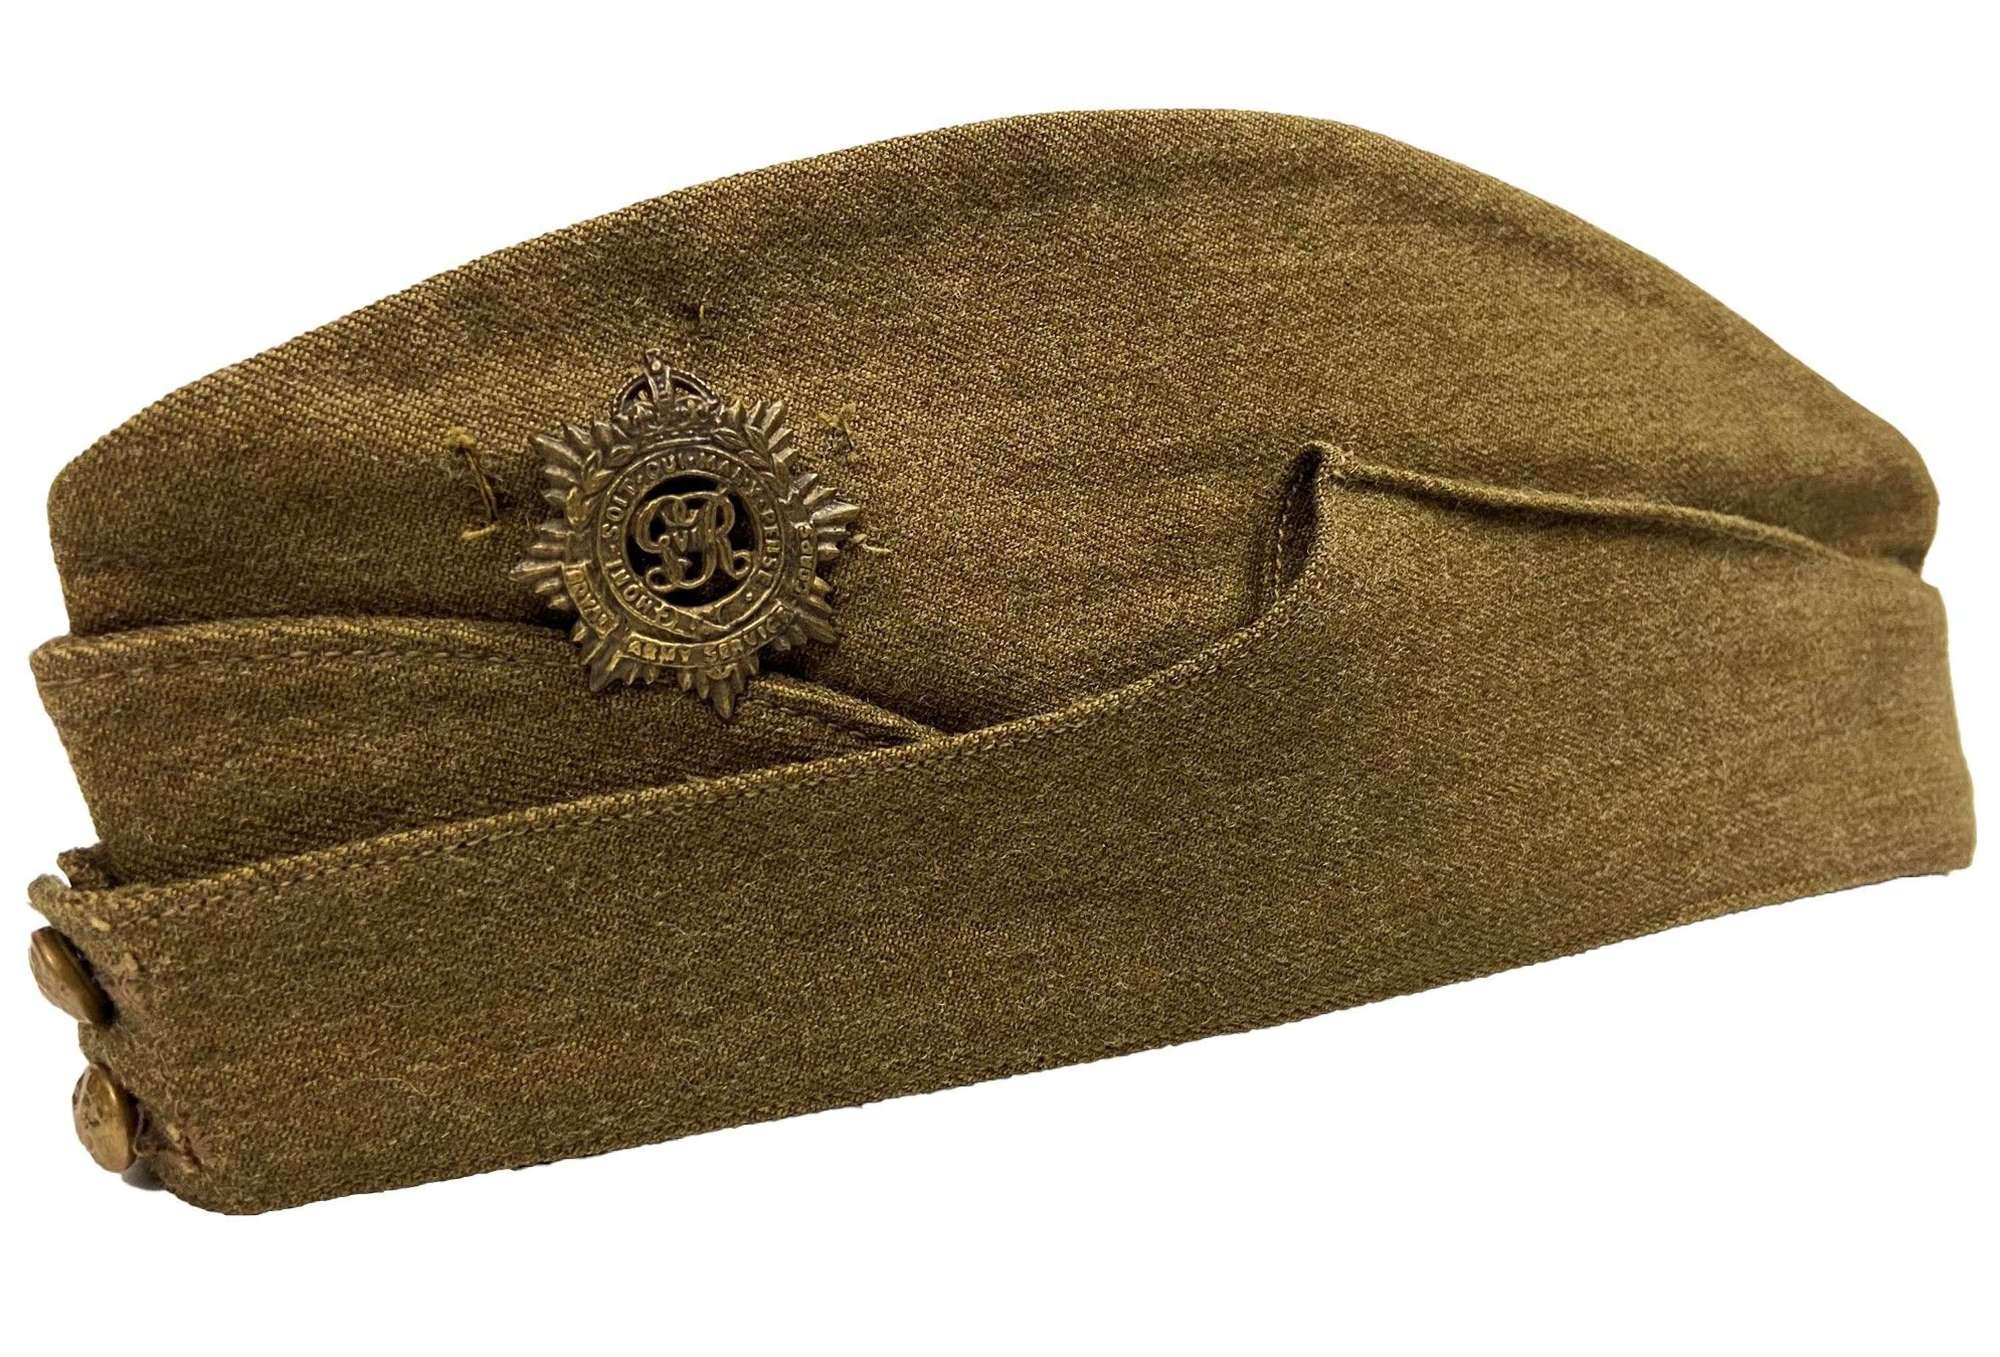 Original 1939 Dated British Army Field Service Cap - Size 6 7/8